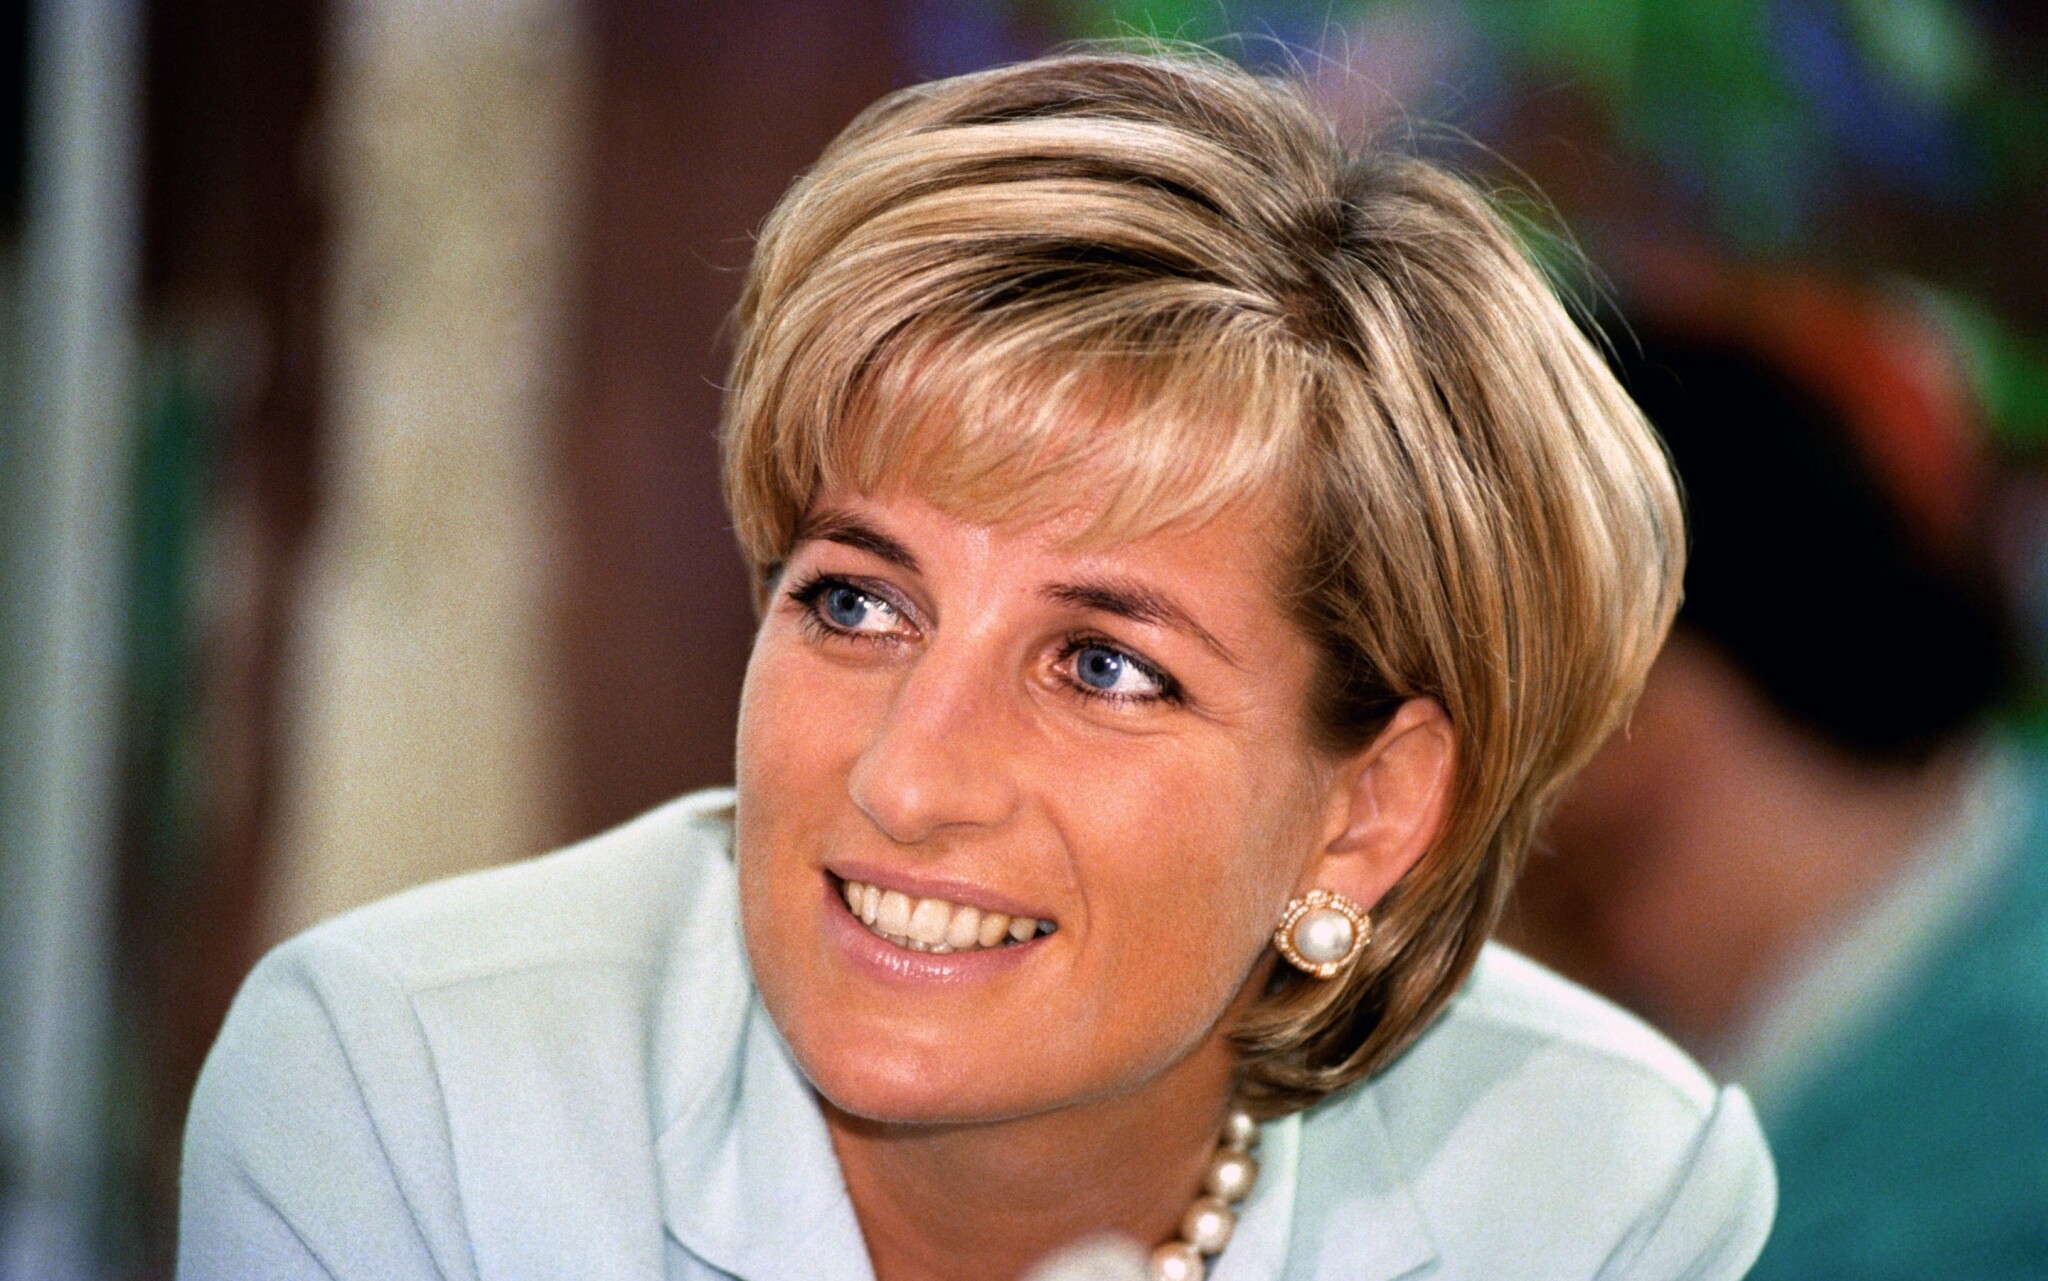 Forbes Royal: Princezna Diana dostane k šedesátinám sochu. Projekt spojí prince Williama a Harryho